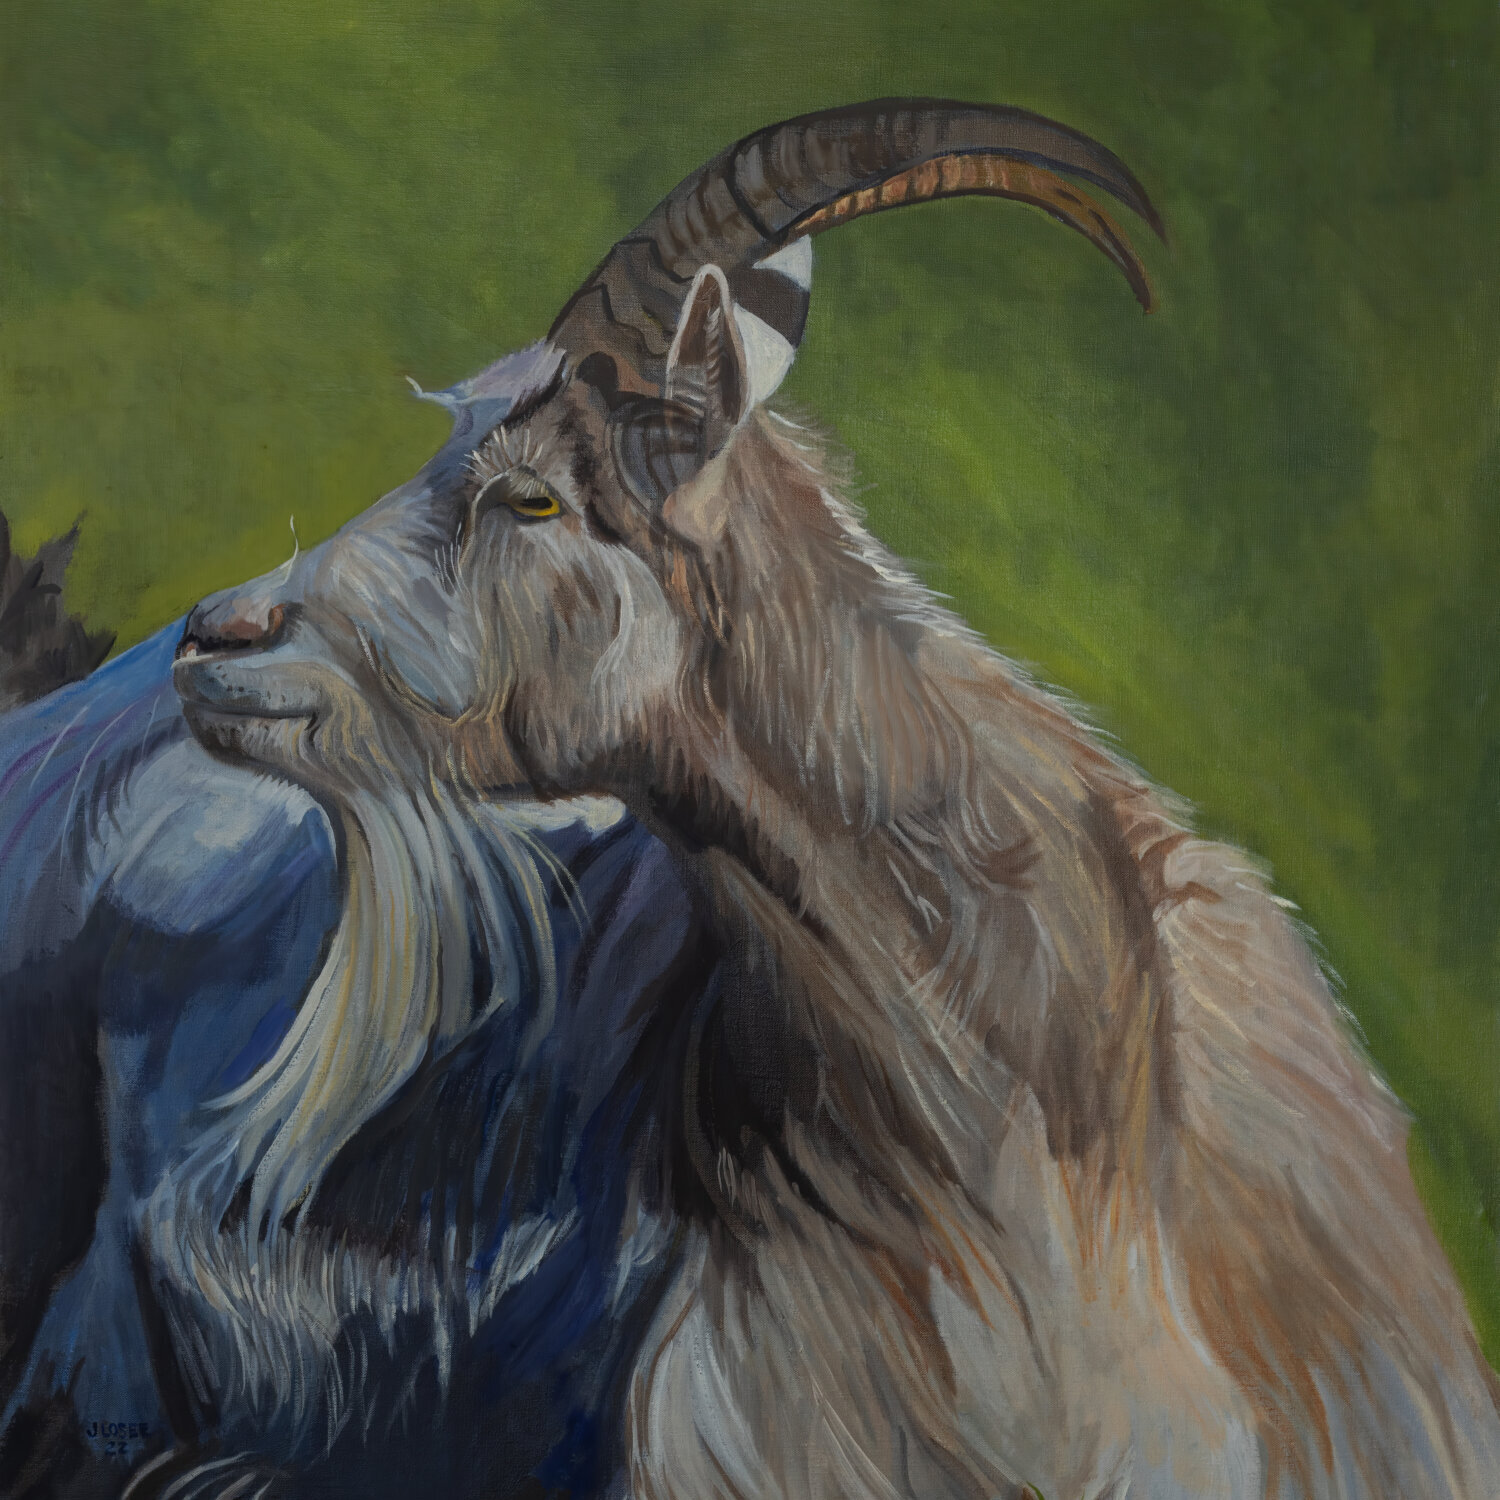 Image of the Icelandic Cashmere Goat